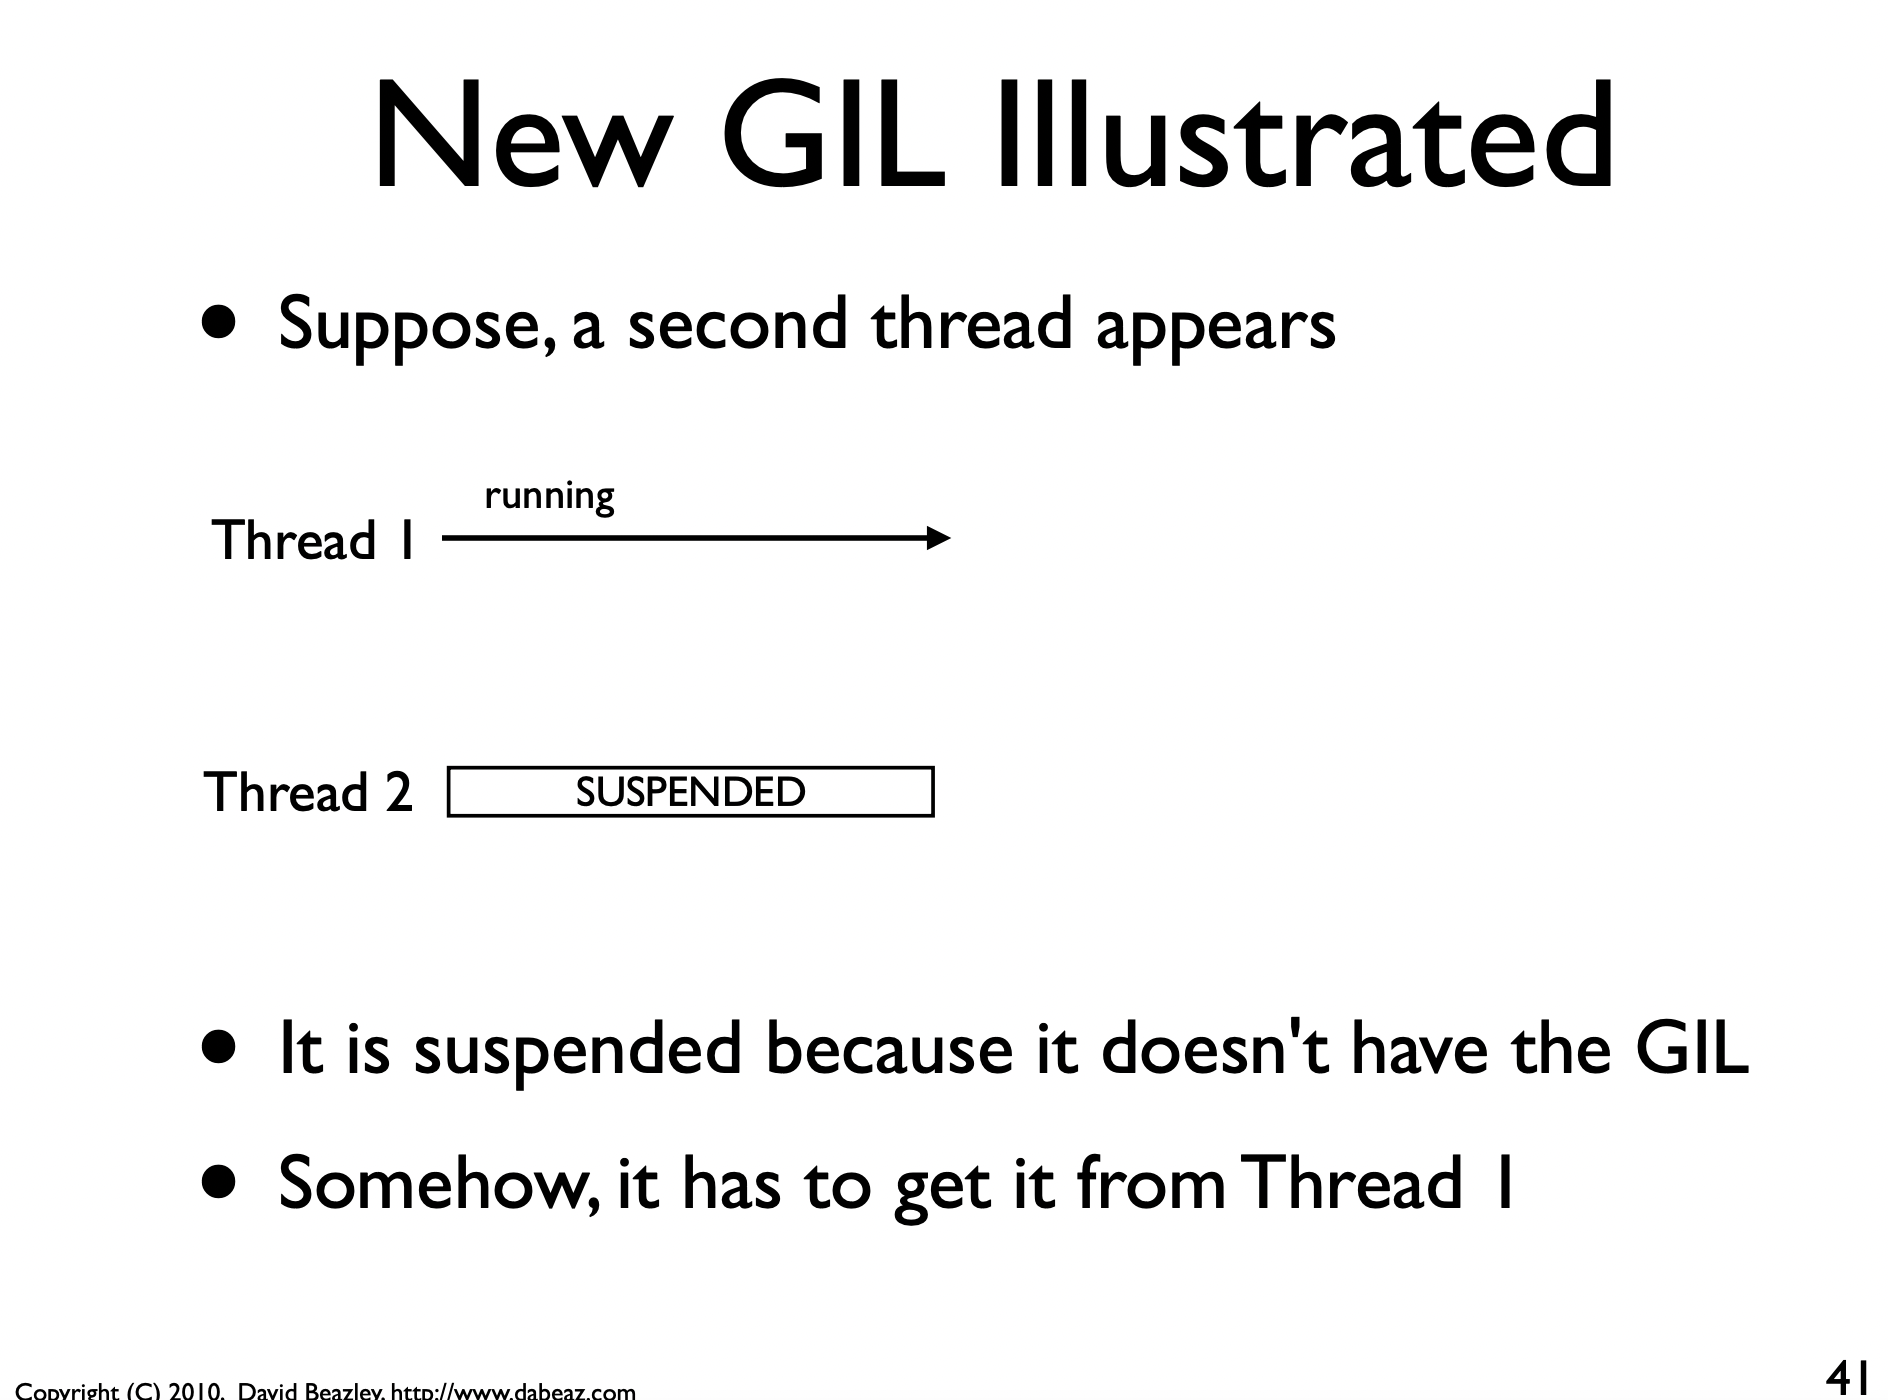 Understanding the Python GIL